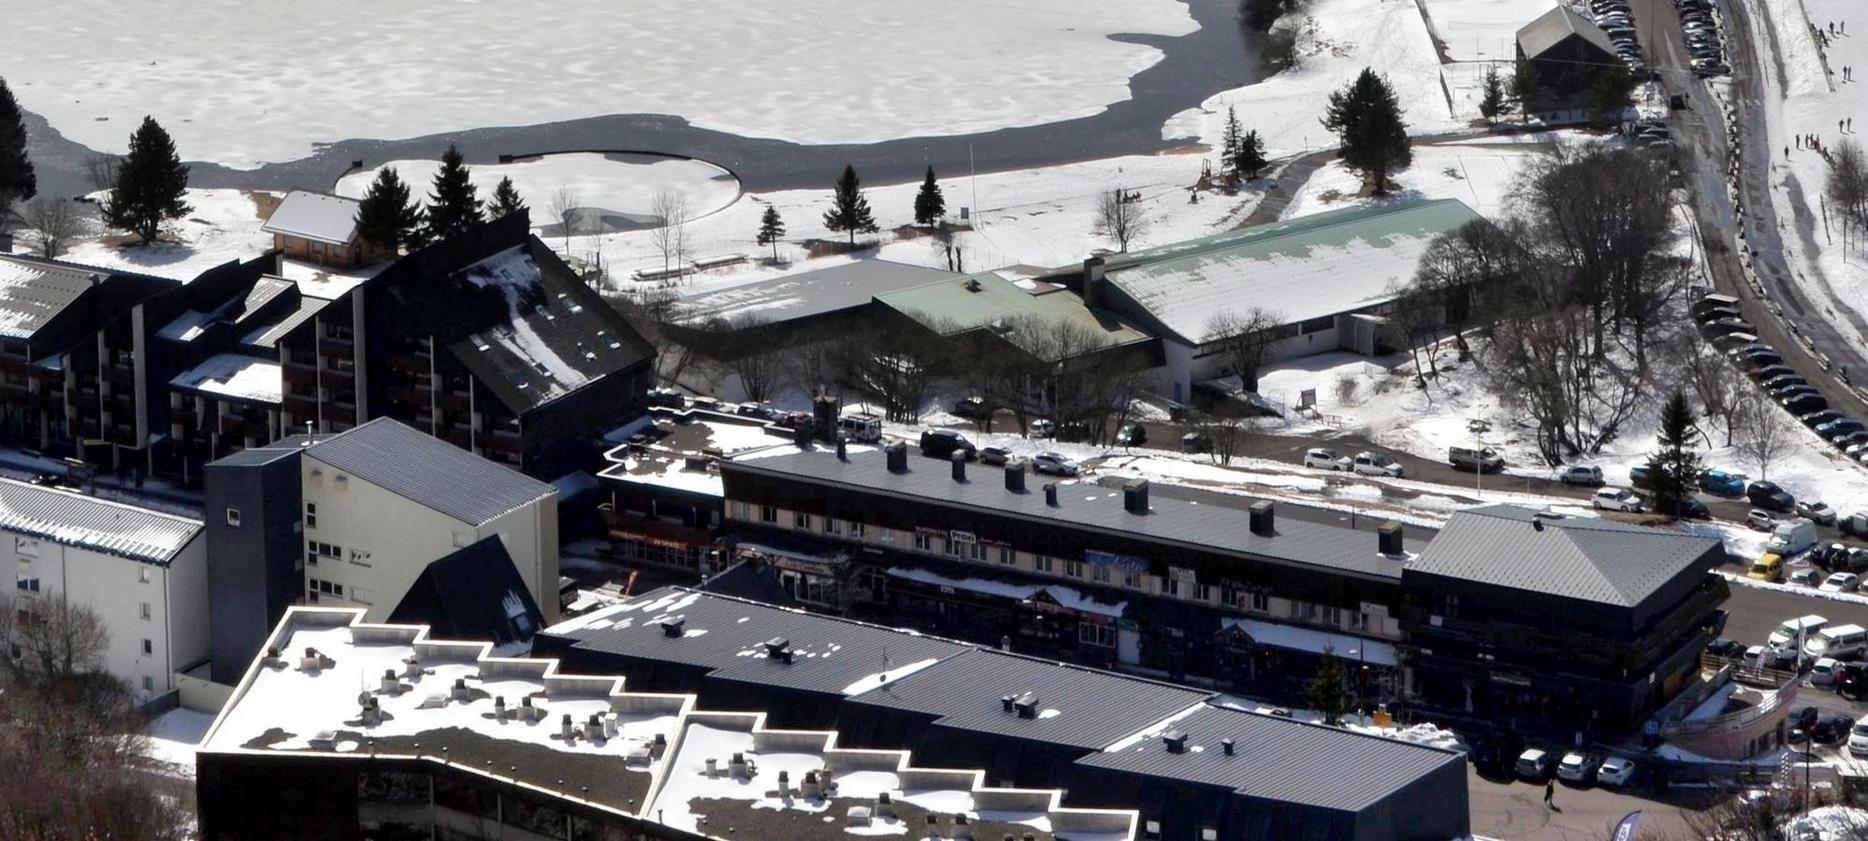 Super Besse - Center of the ski resort in winter